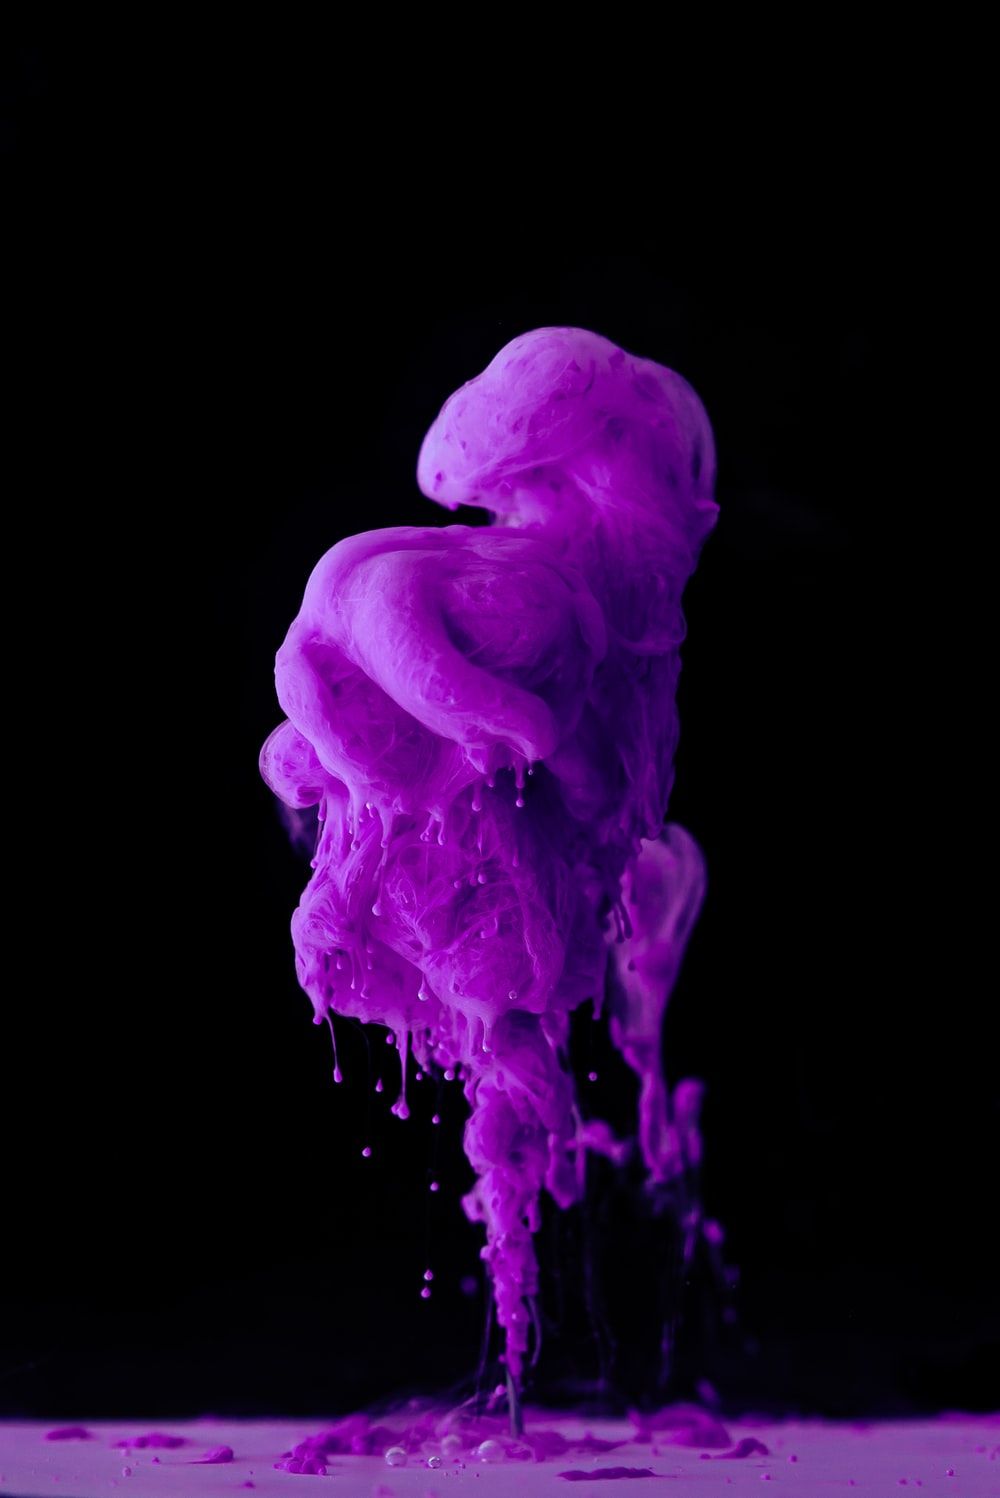 purple smoke on black background photo